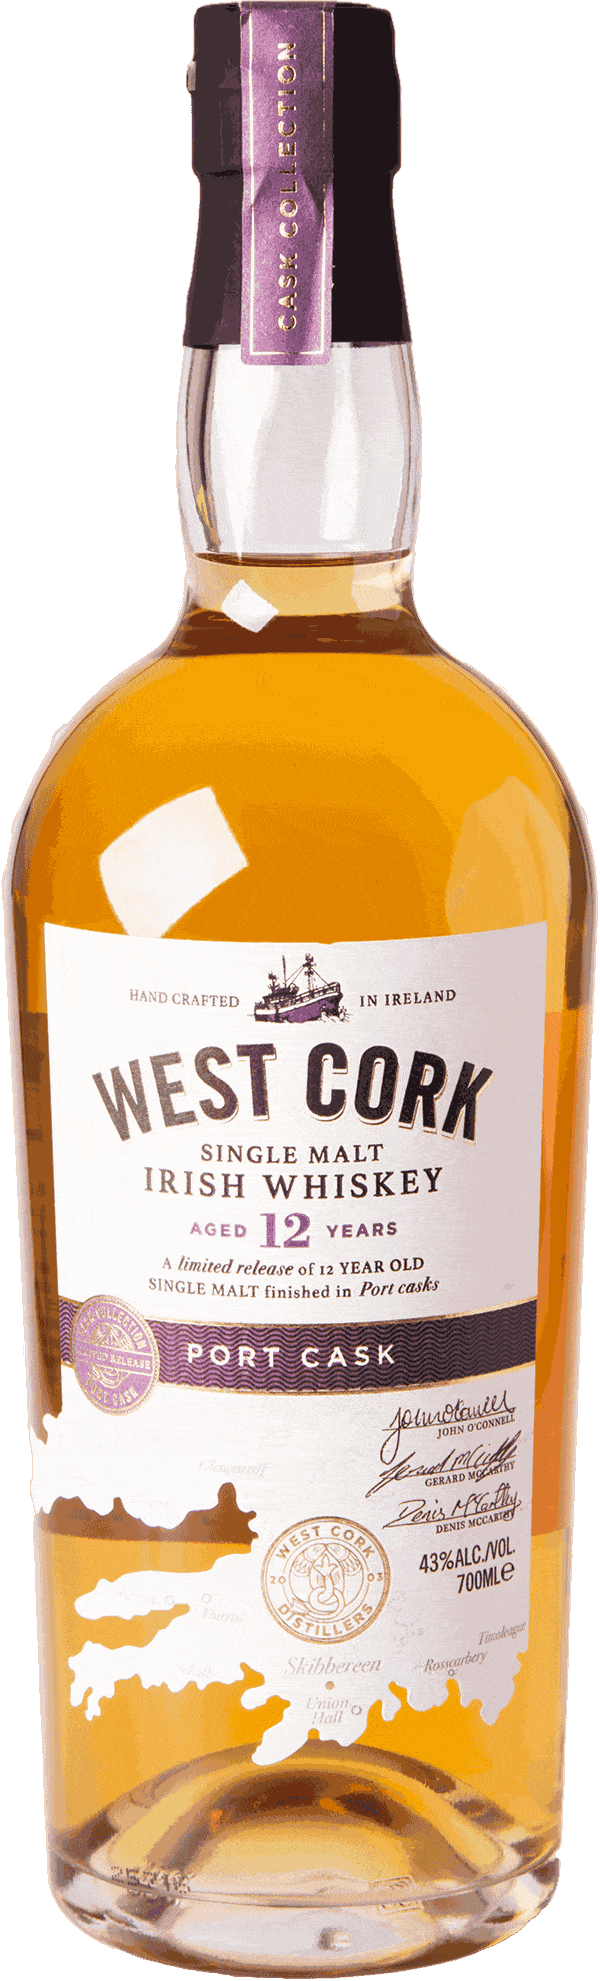 Whisky: West Cork 12 Years Old Portwood Finish